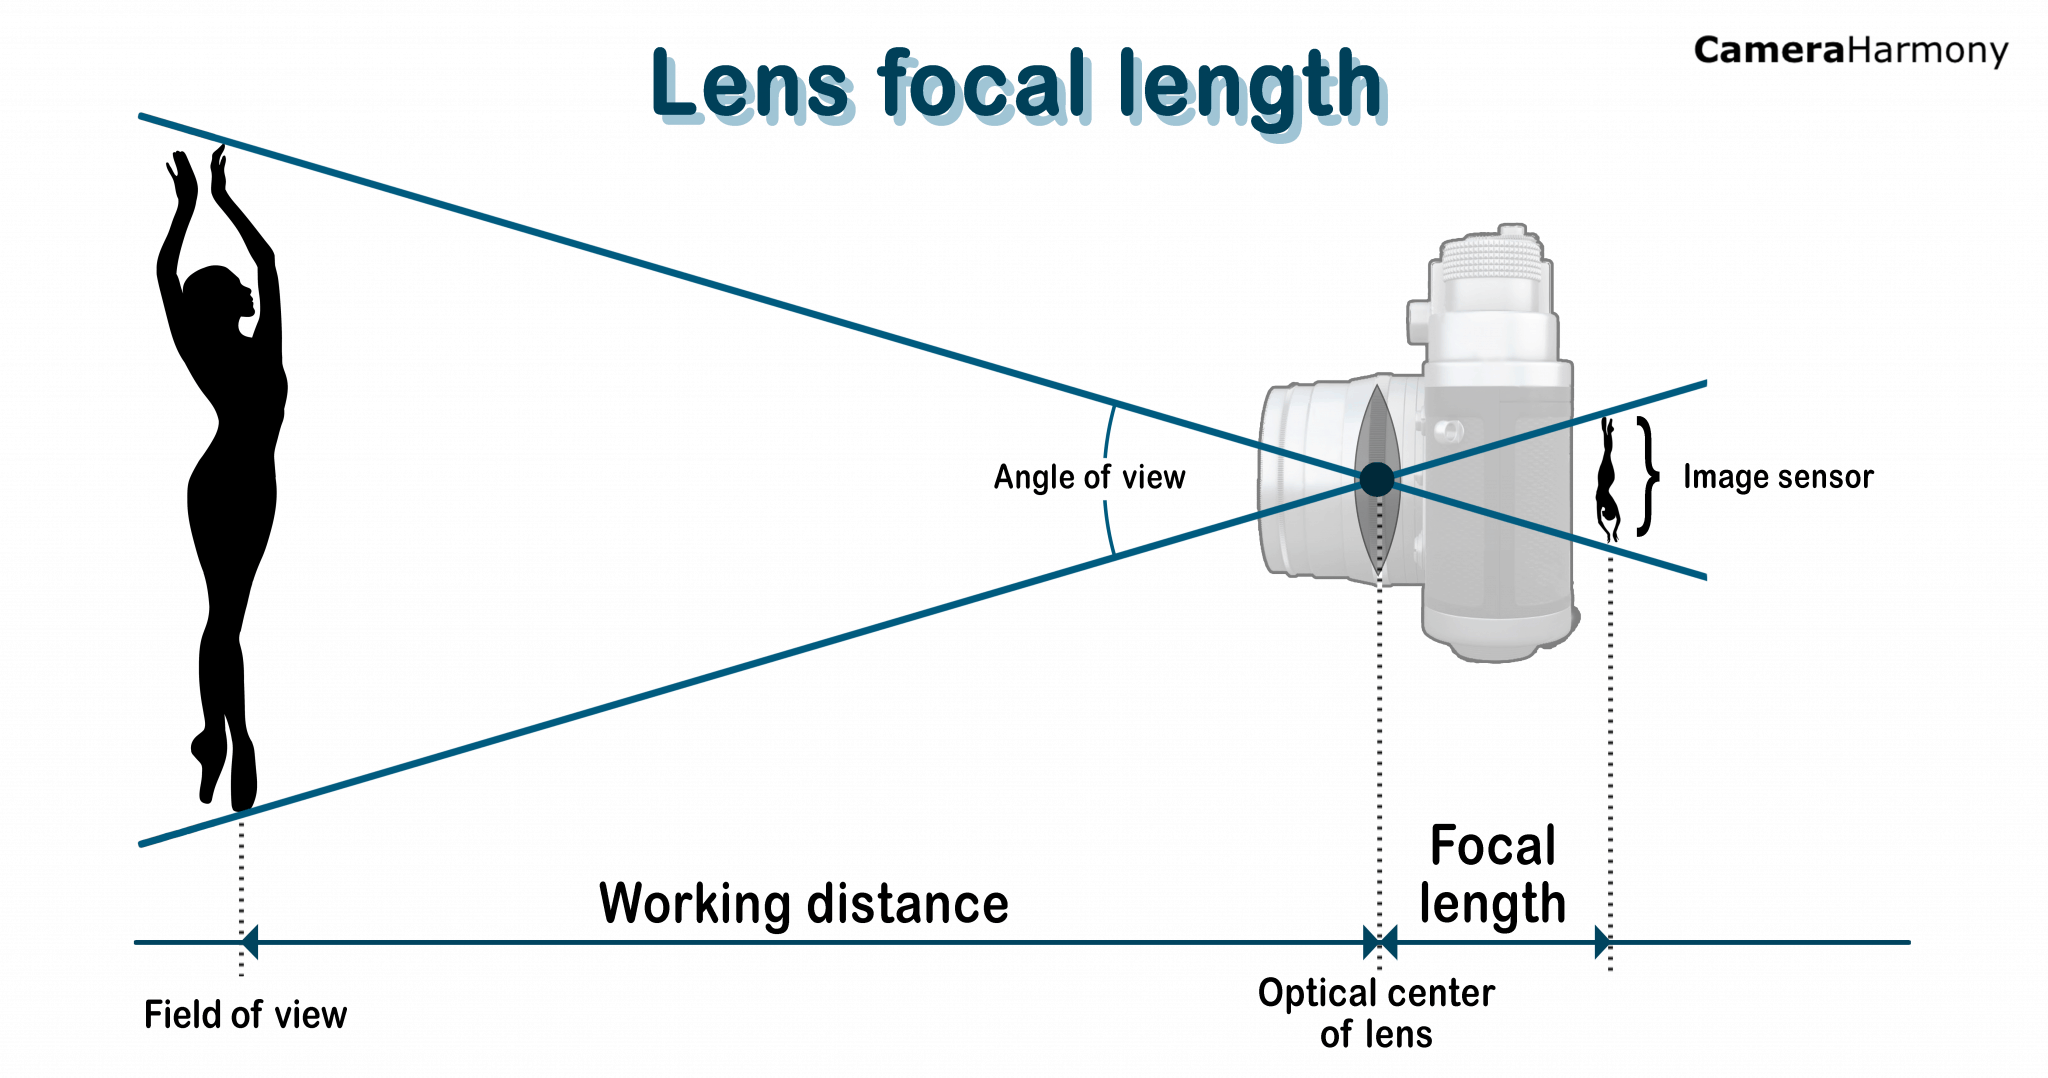 zbrush focal length